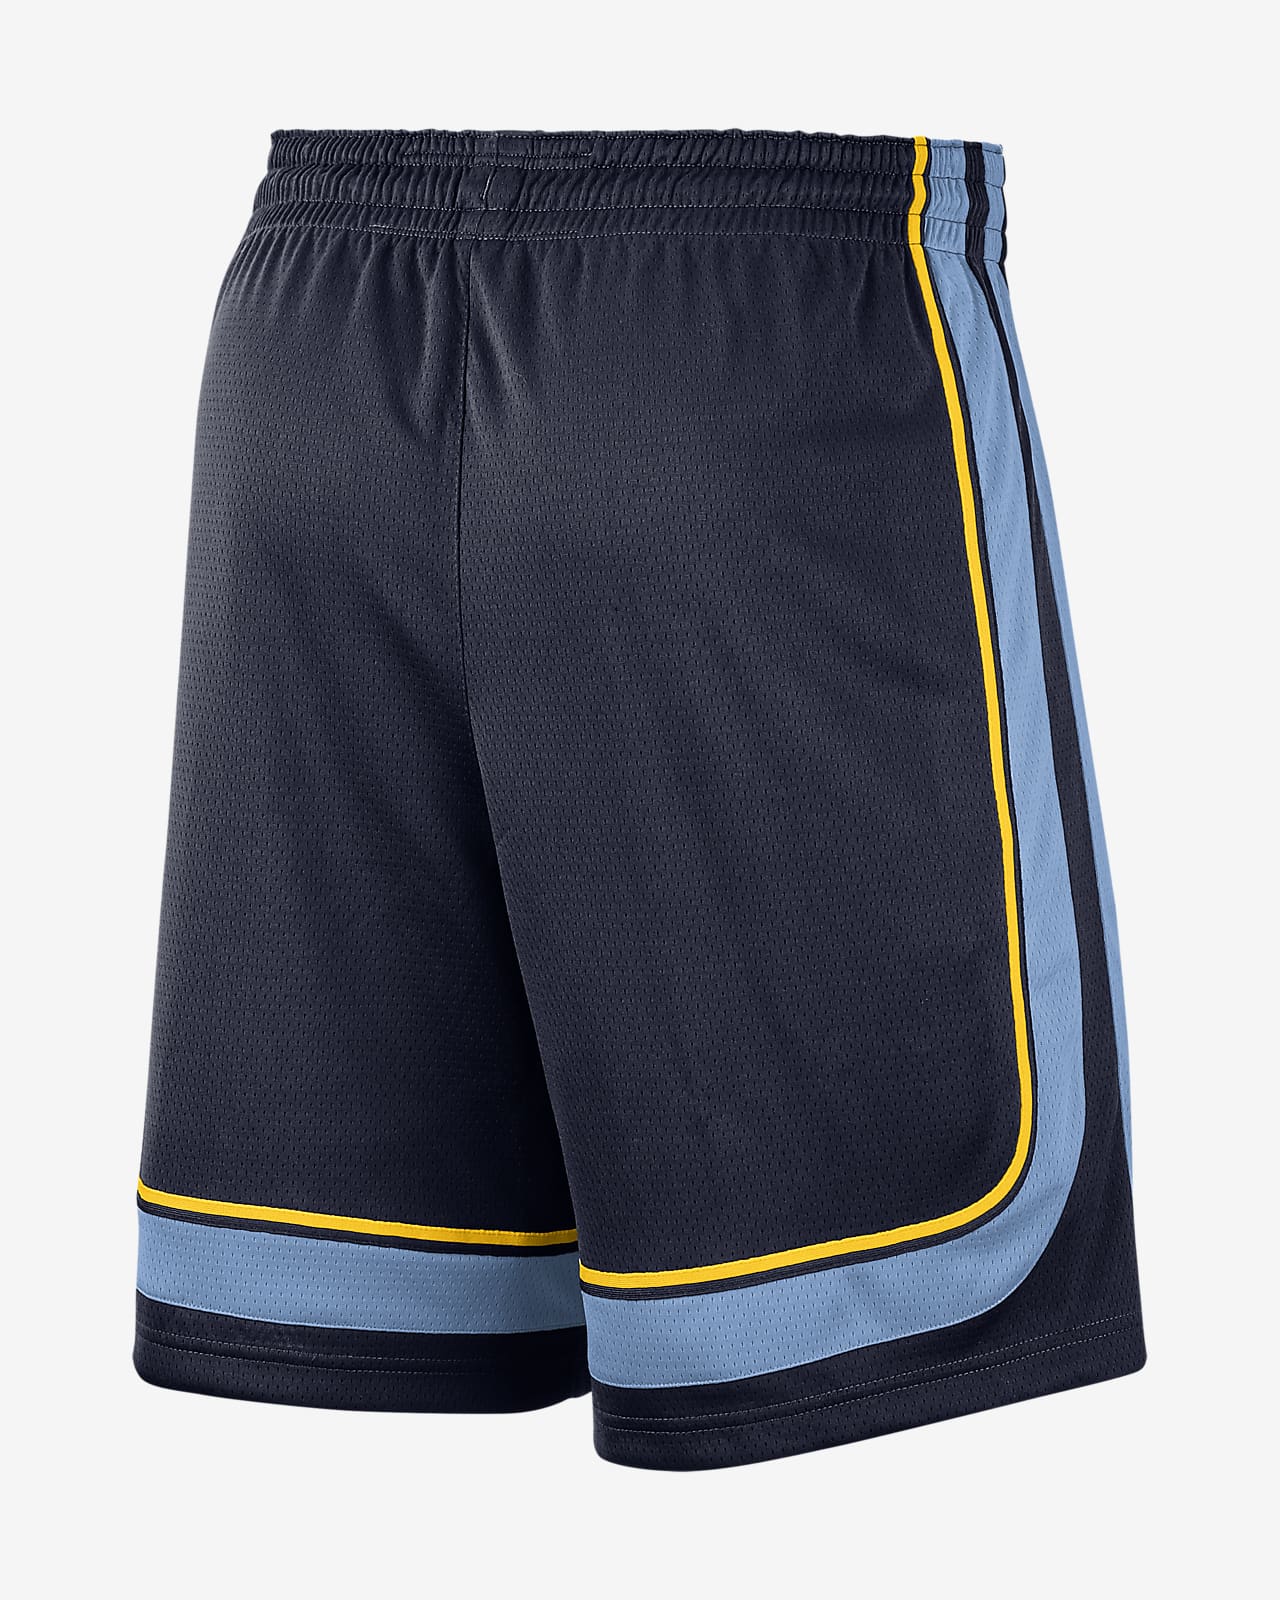 Nike Dri-FIT Icon Men's Basketball Shorts. Nike LU